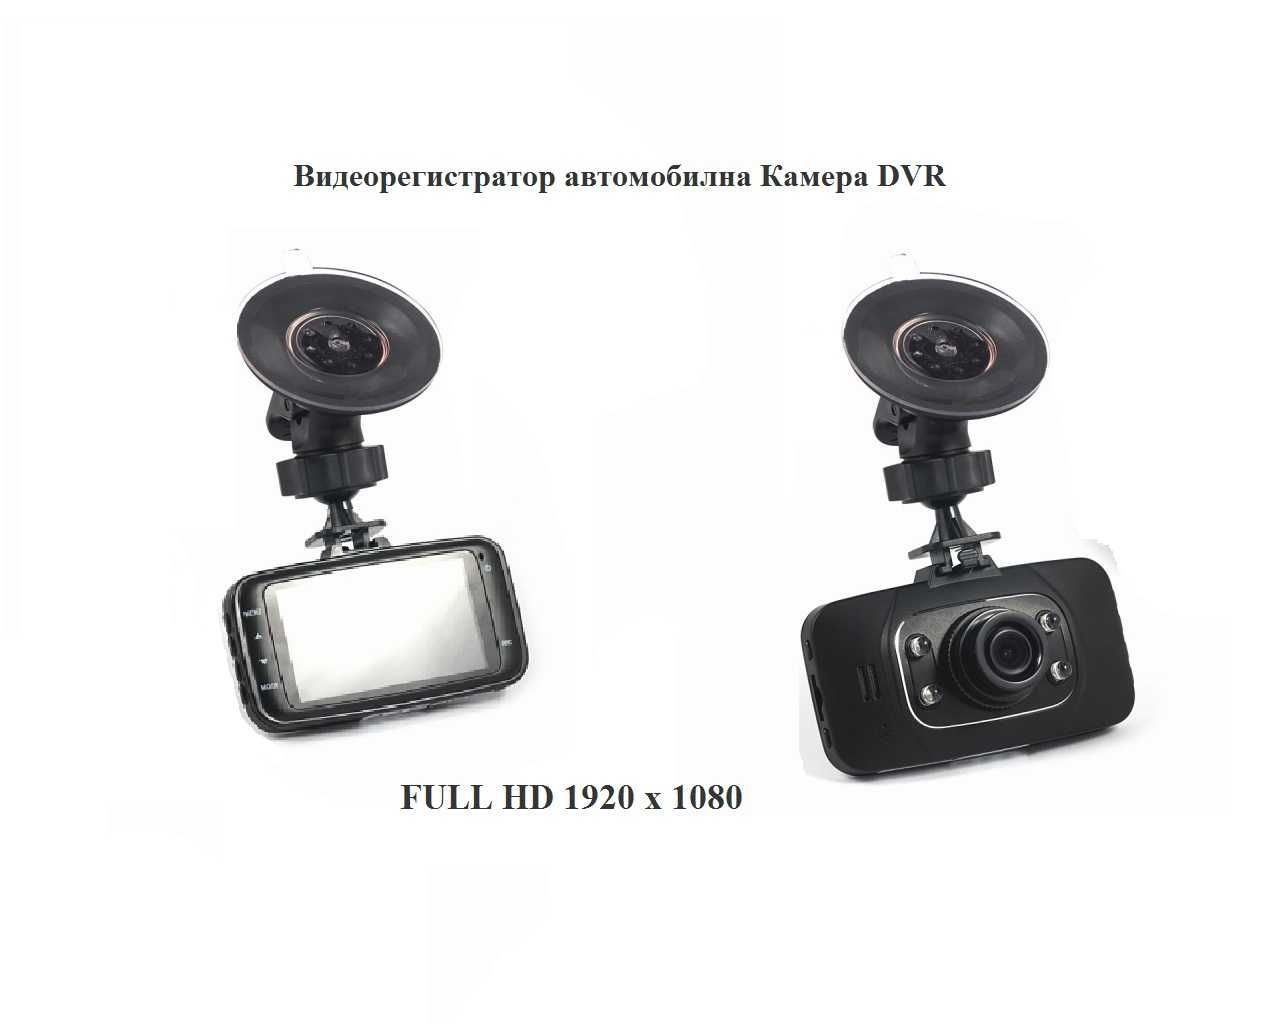 Видеорегистратор автомобилна Камера FULL HD 1920 x 1080 DVR